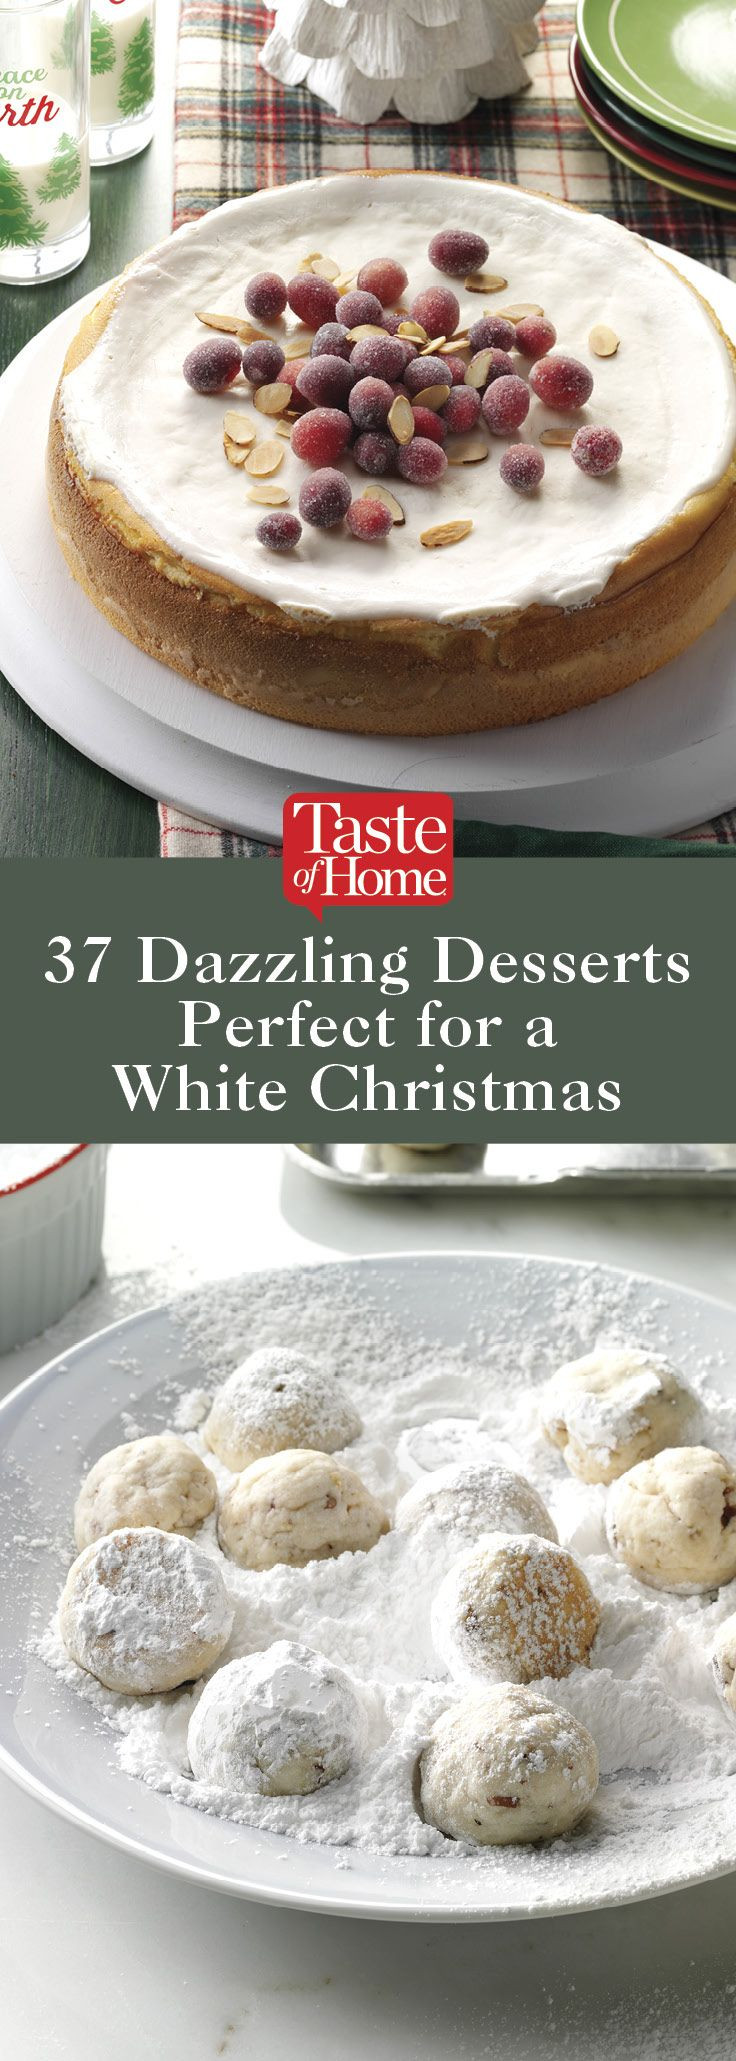 Taste Of Home Christmas Desserts
 210 best 25 Days of Christmas Cheer images on Pinterest